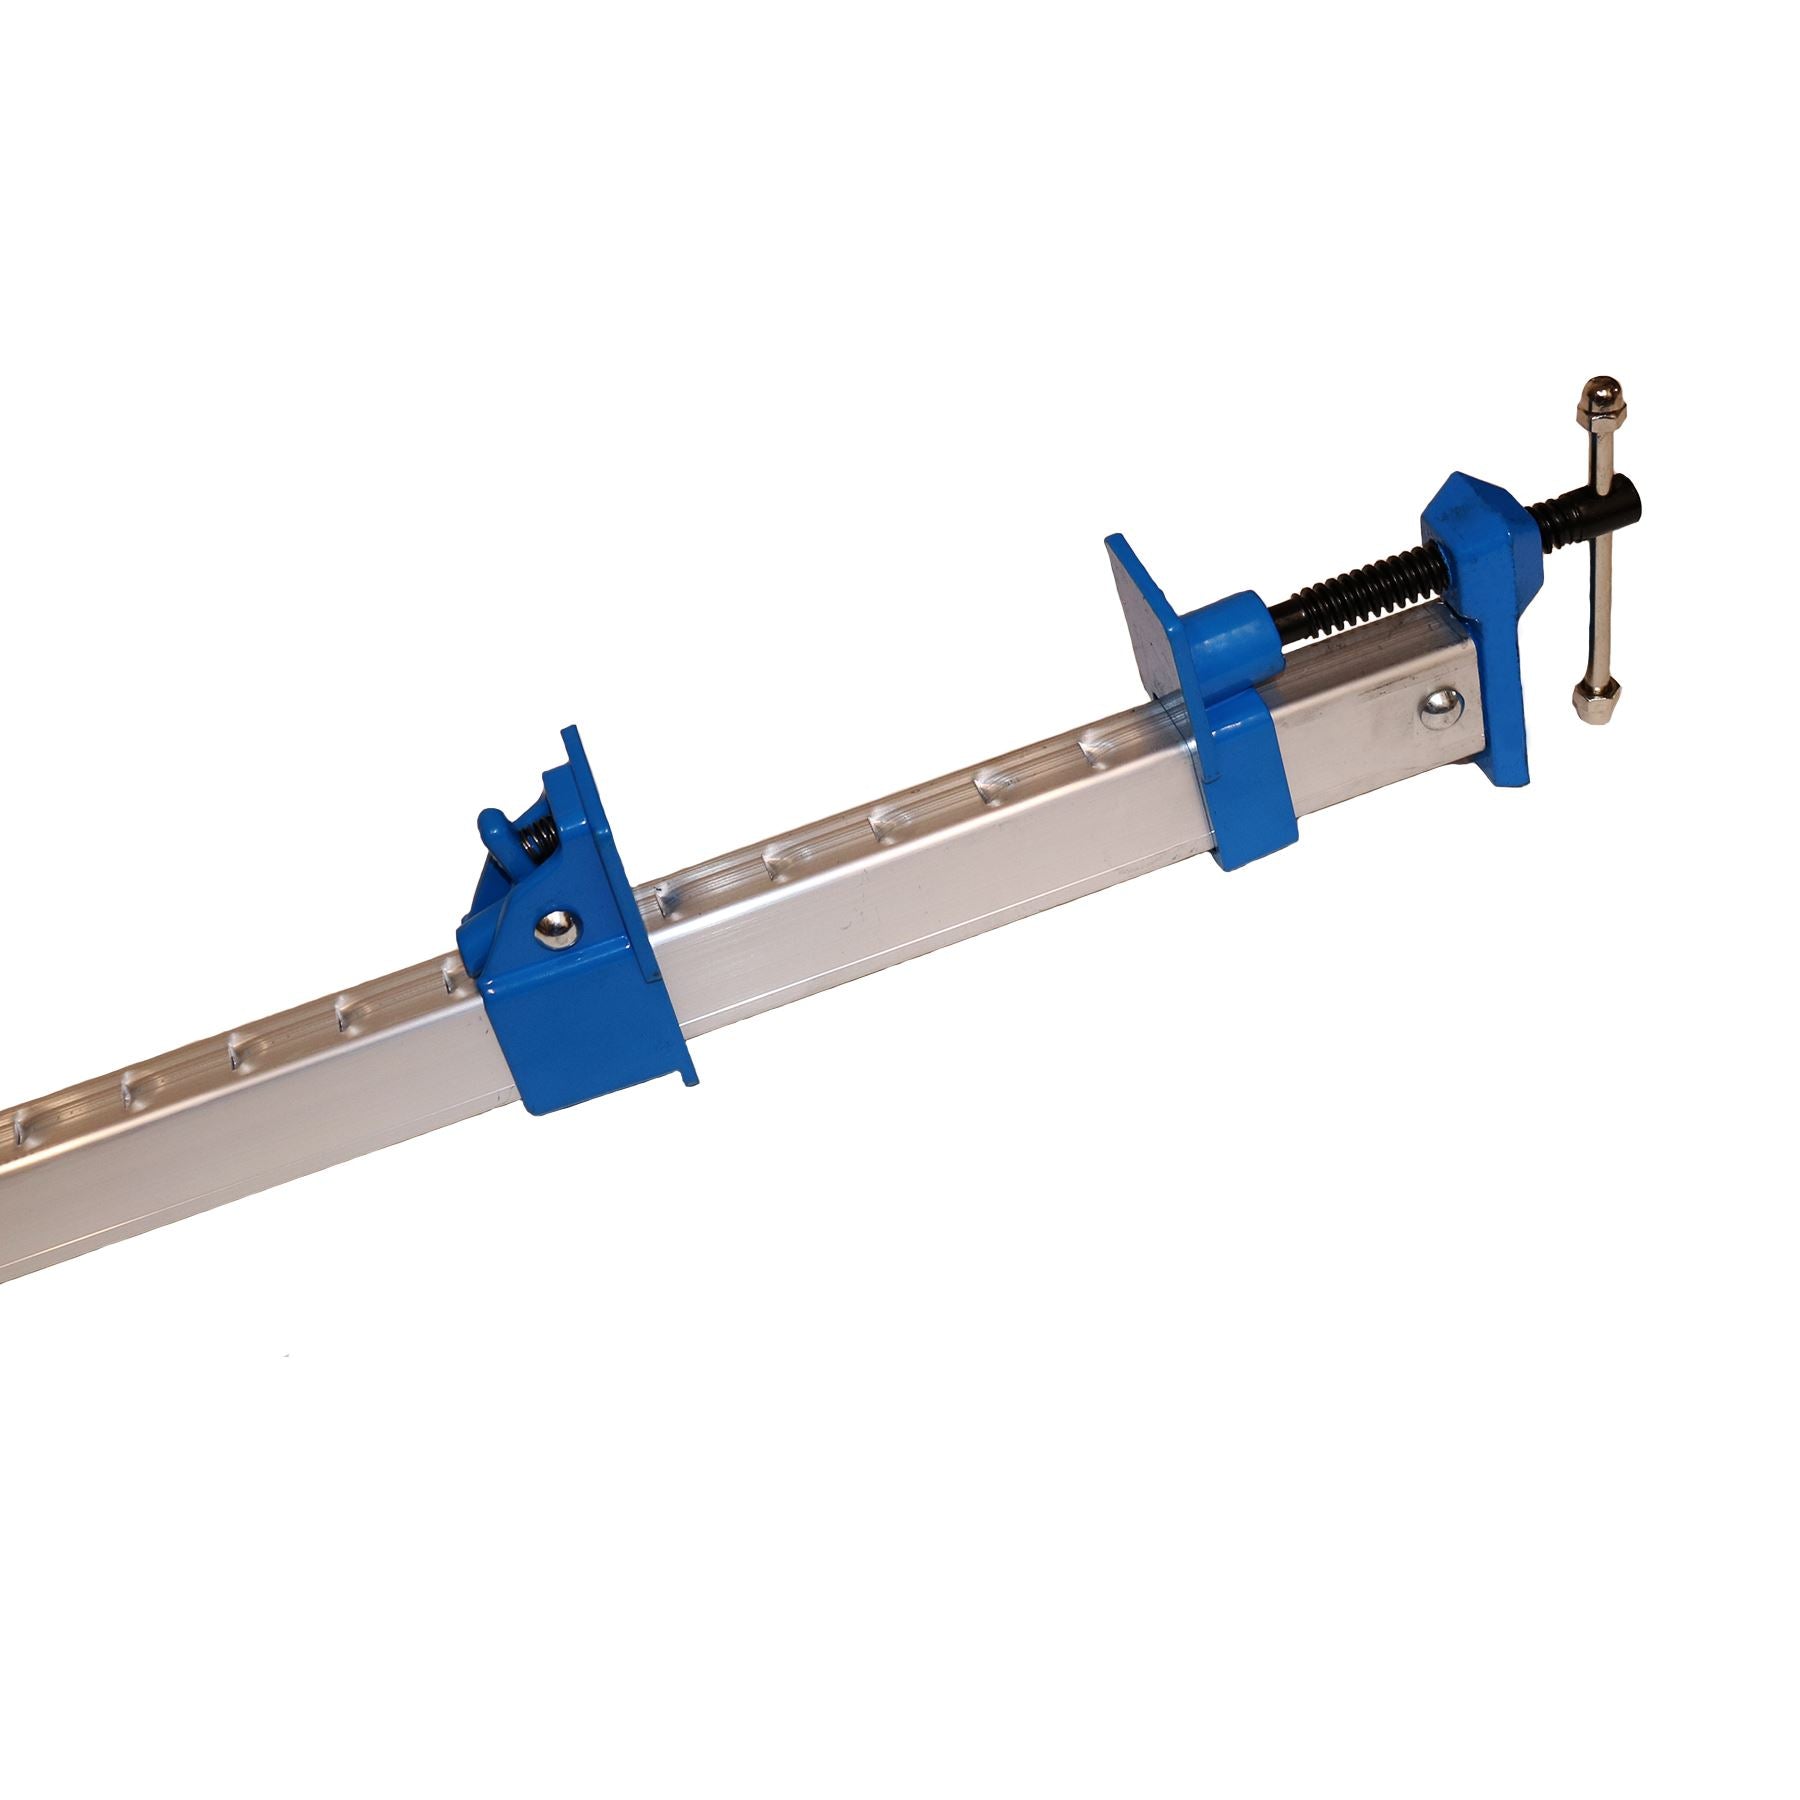 60” (1500mm) Aluminium Sash Clamp Grip Bench Work Holder vice Slide Cramp